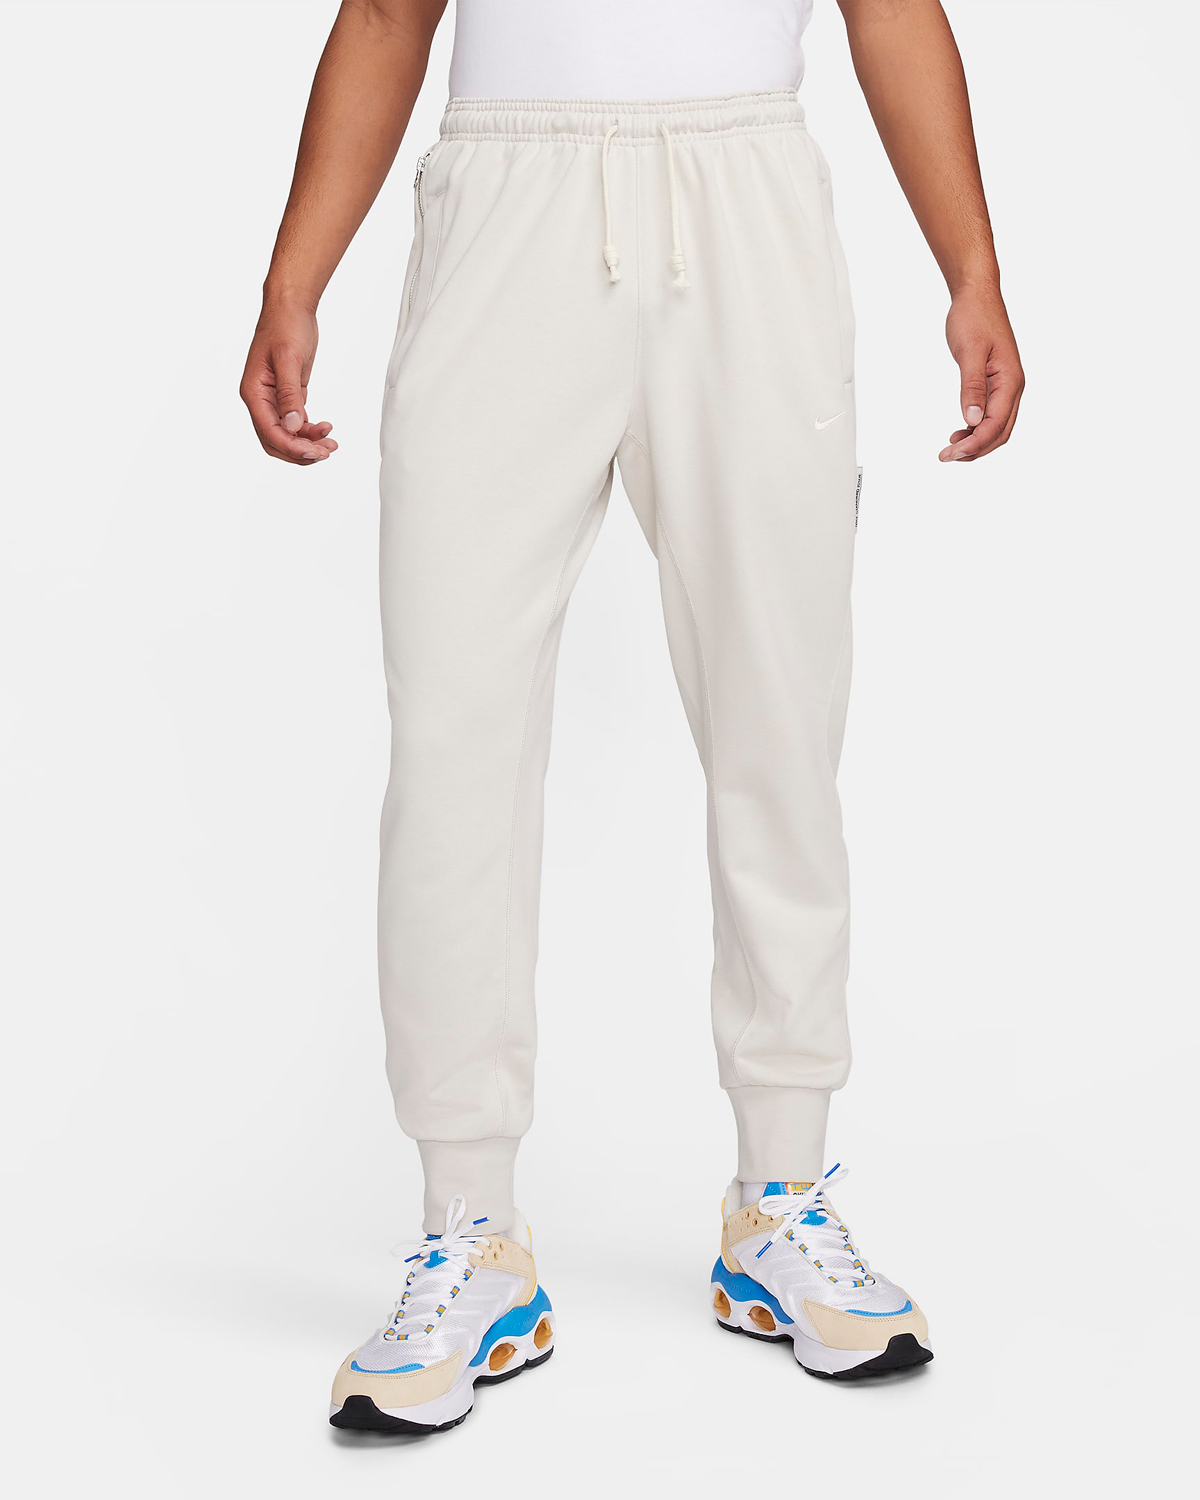 Nike Standard Issue Pants Light Orewood Brown